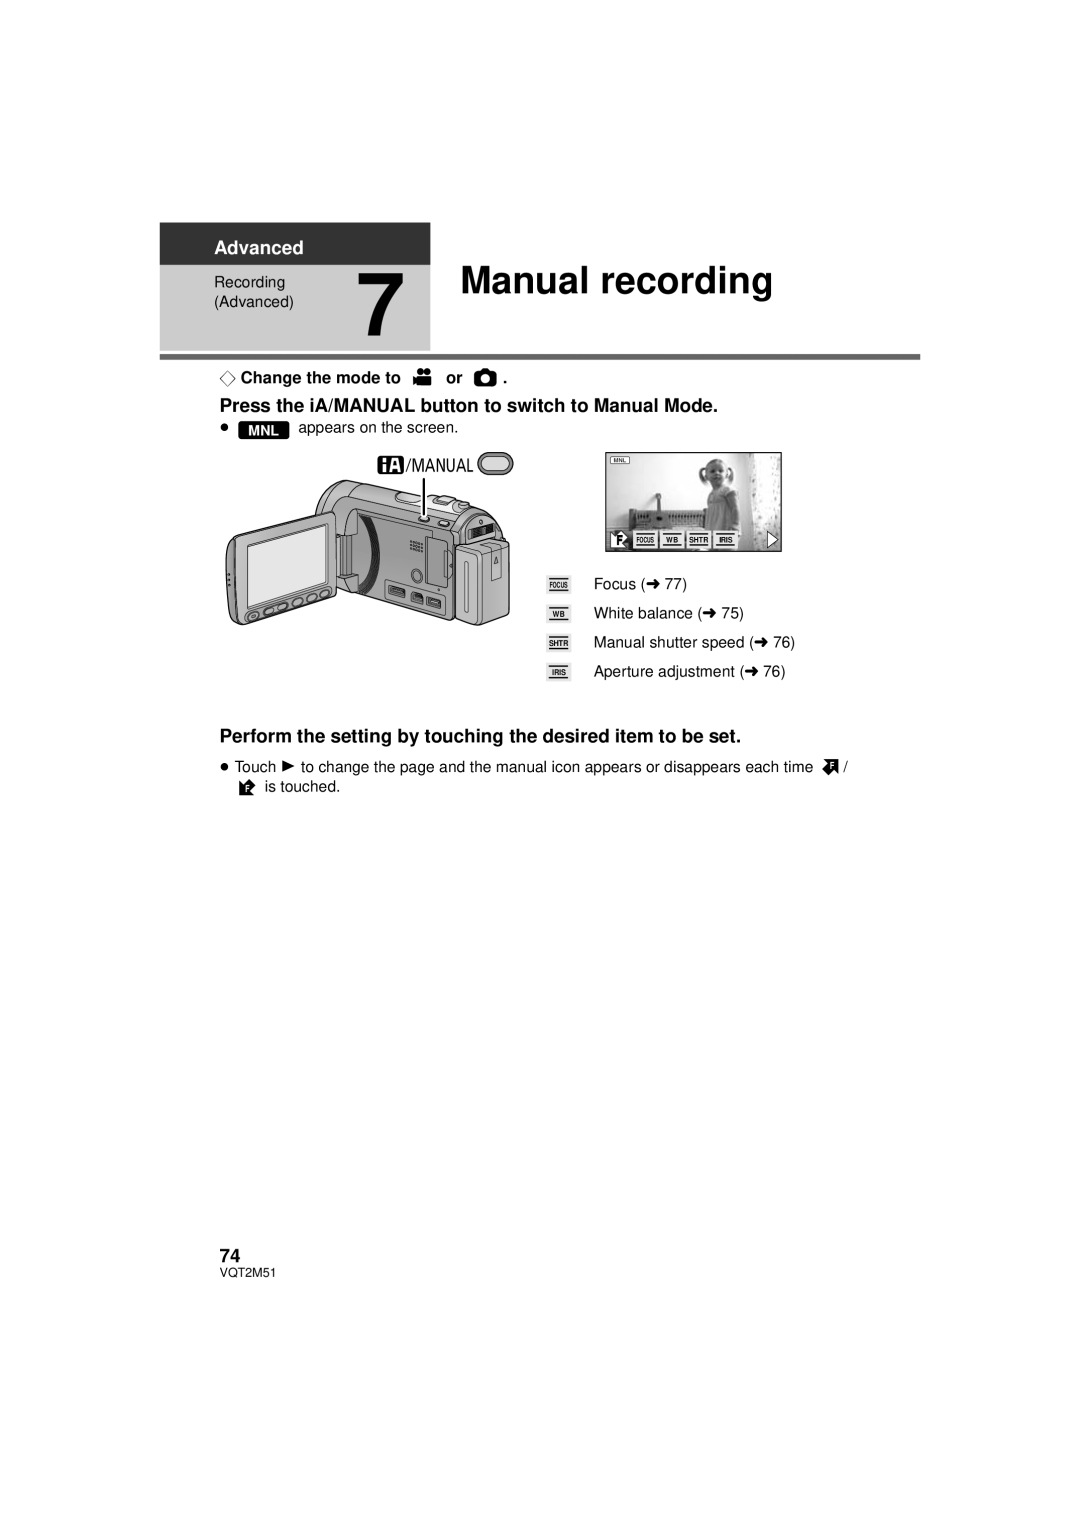 Panasonic HDC-TM55P/PC, HDC-SD60P/PC Manual recording, Press the iA/MANUAL button to switch to Manual Mode, Advanced 